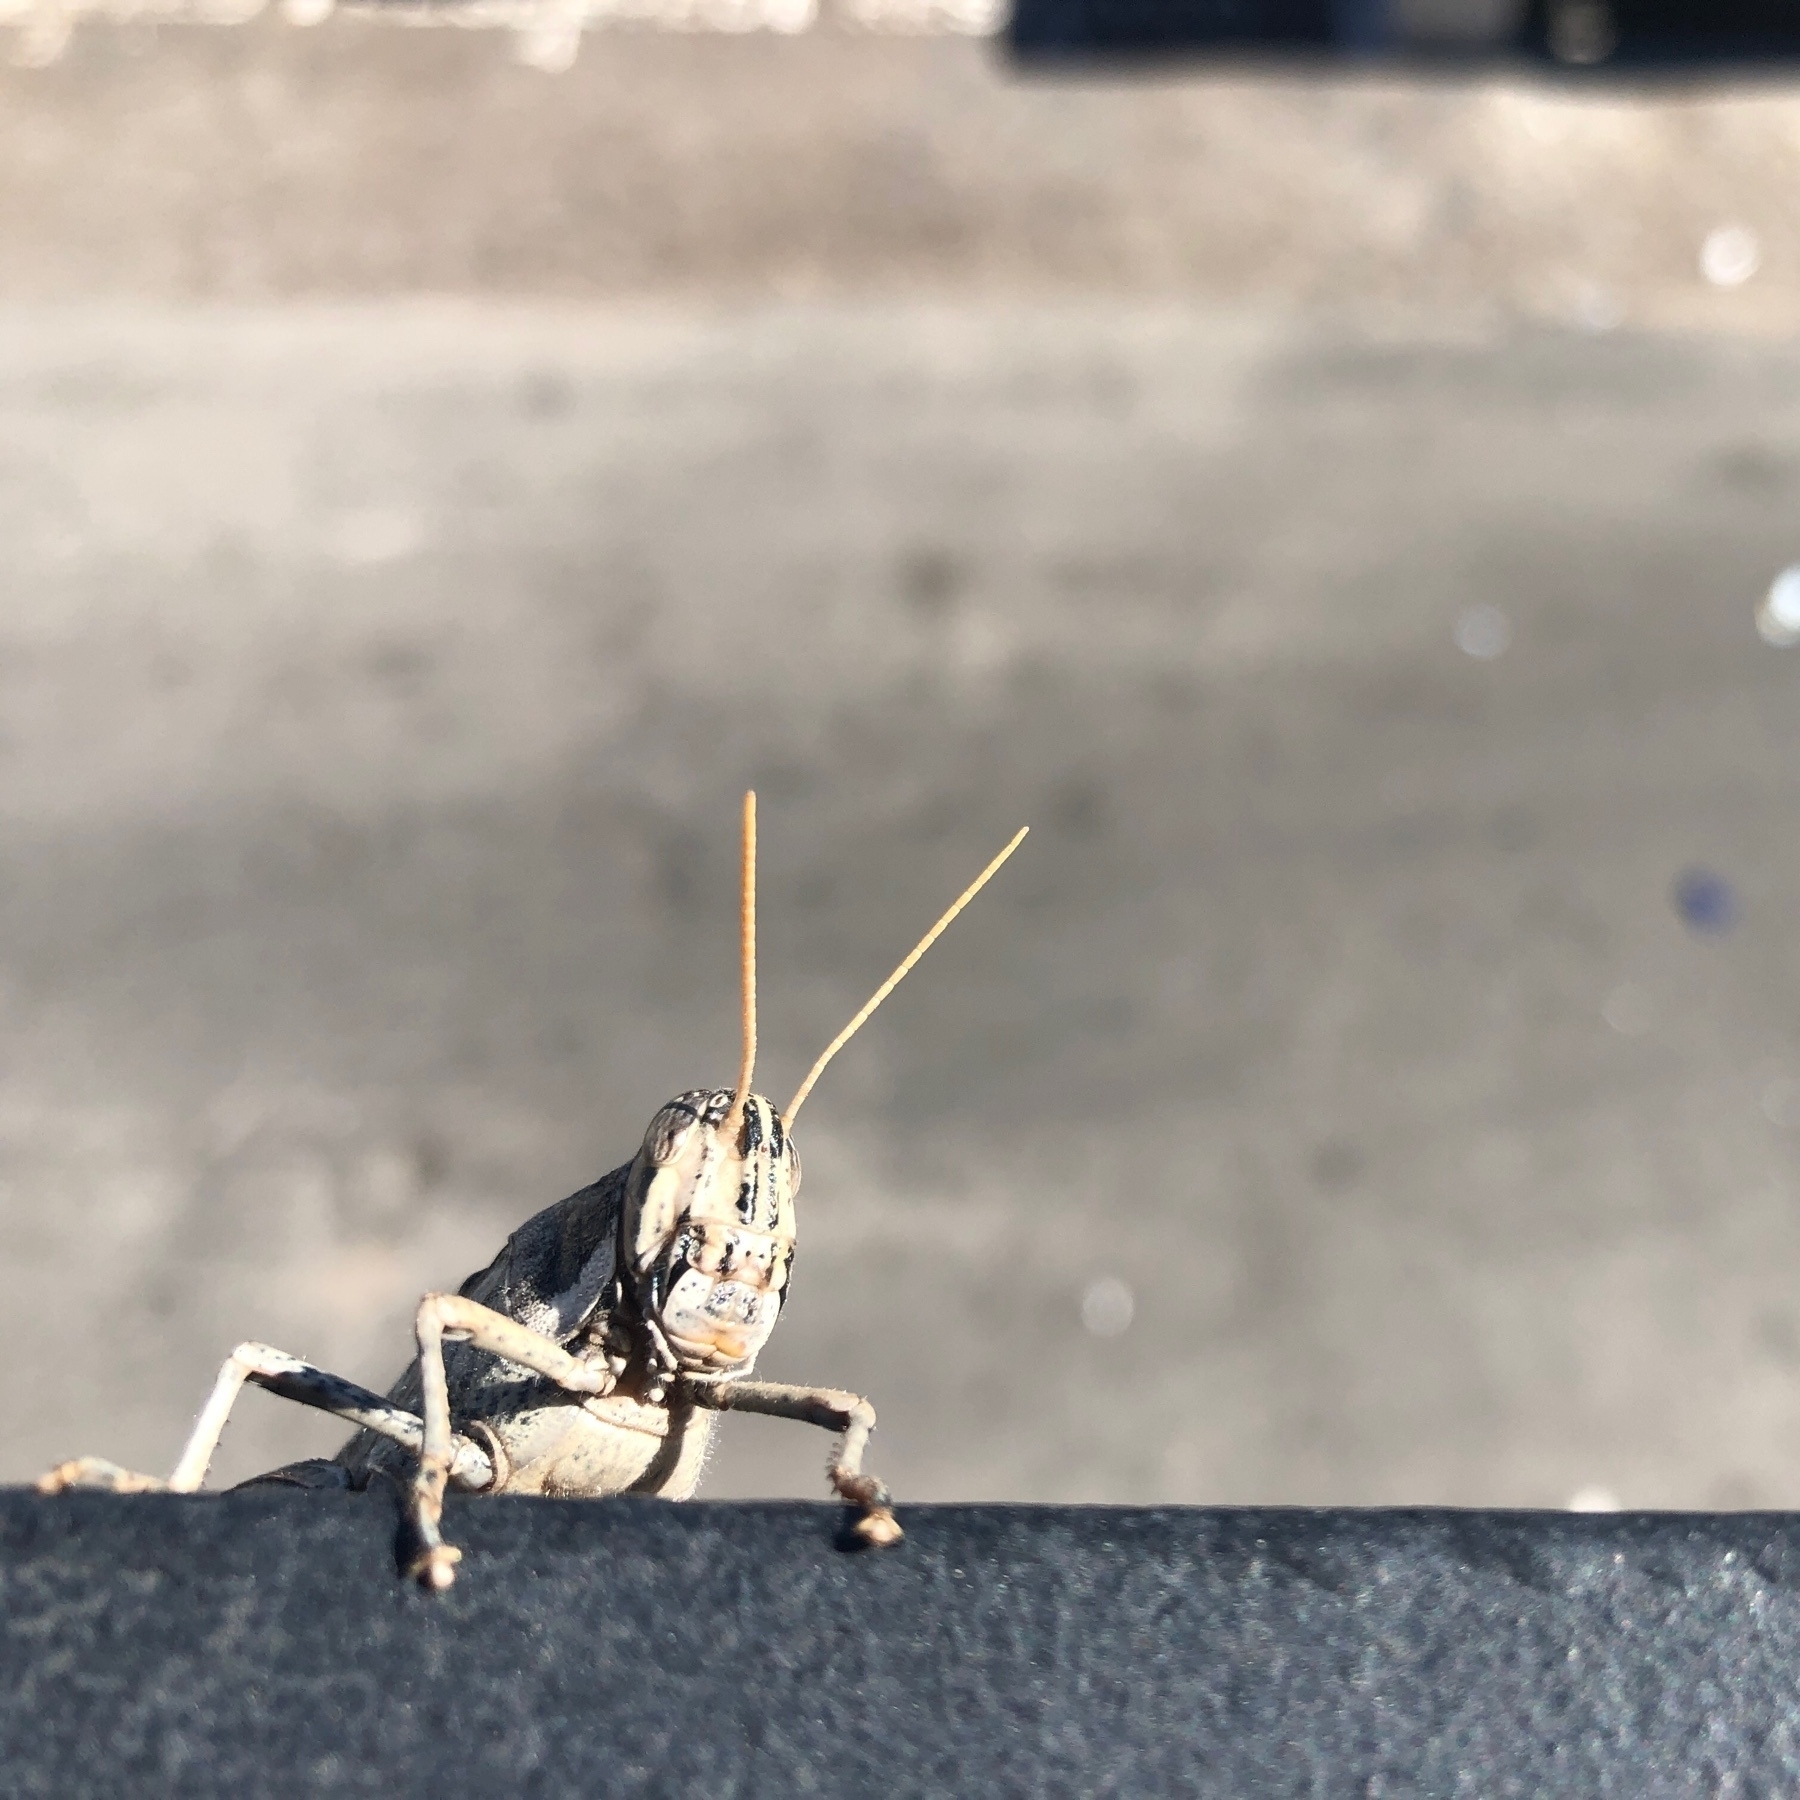 Closeup of locust (grasshopper) on black metal railing with blurry indistinct background.